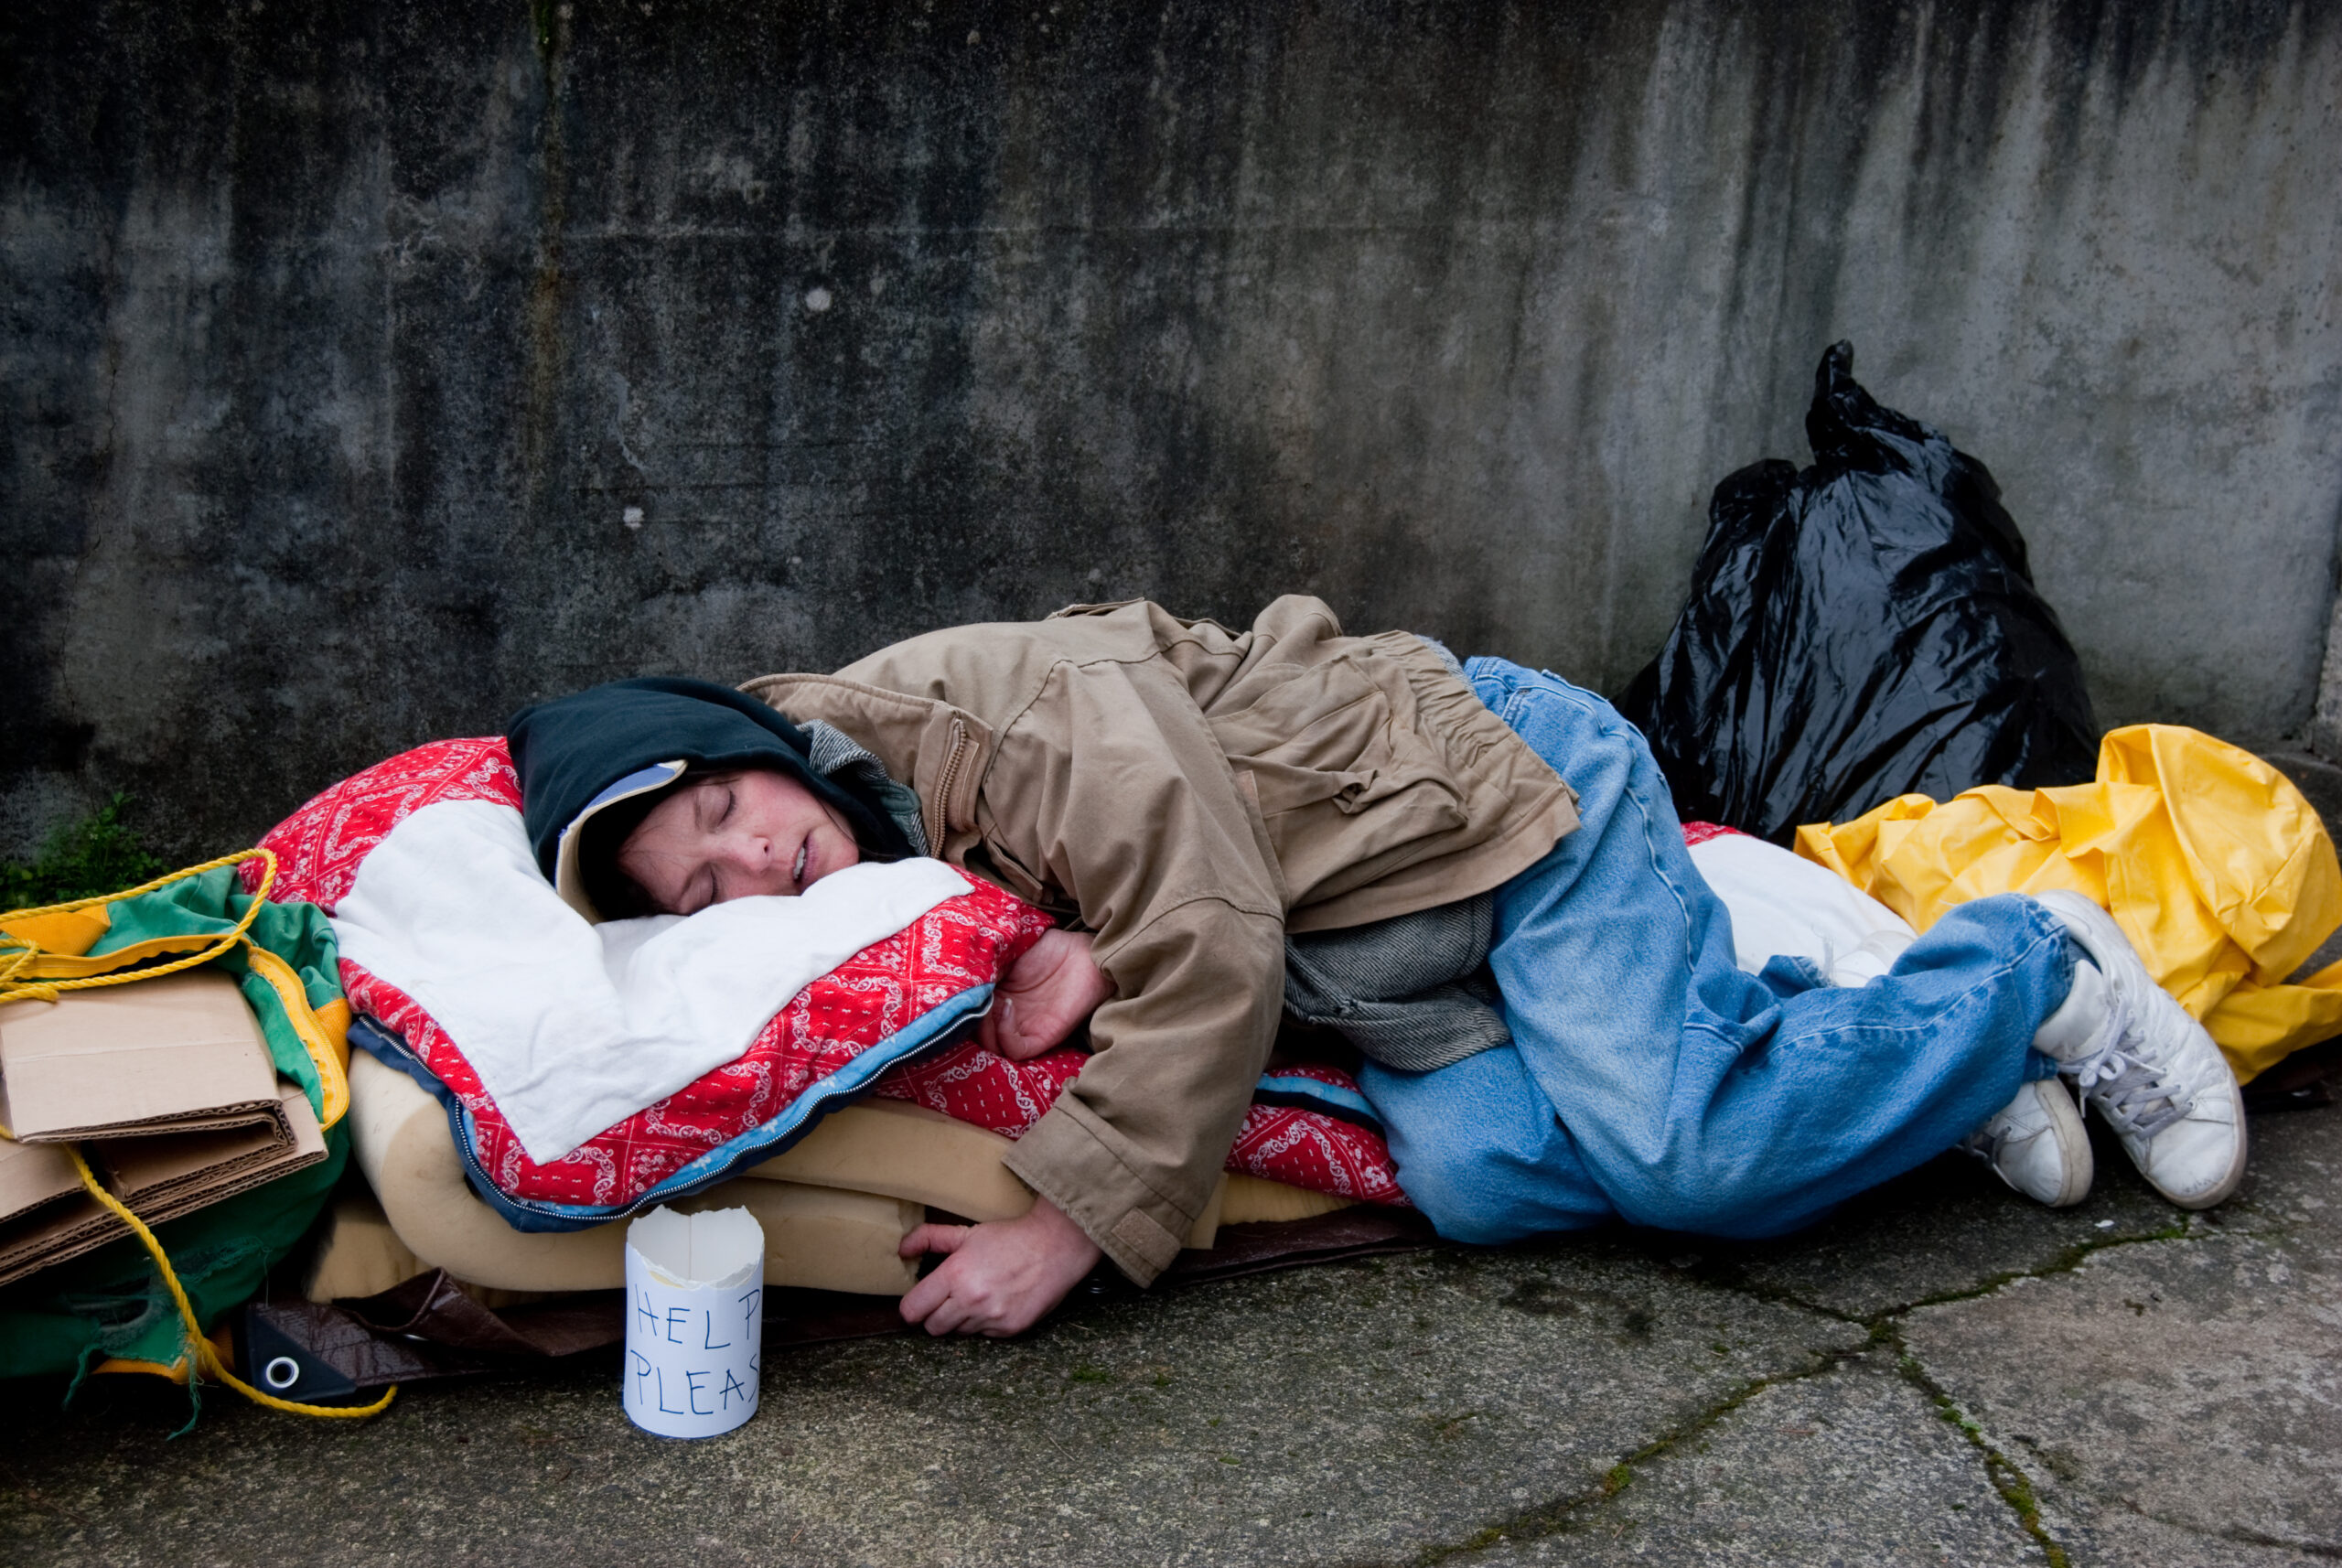 Kiwi homelessness